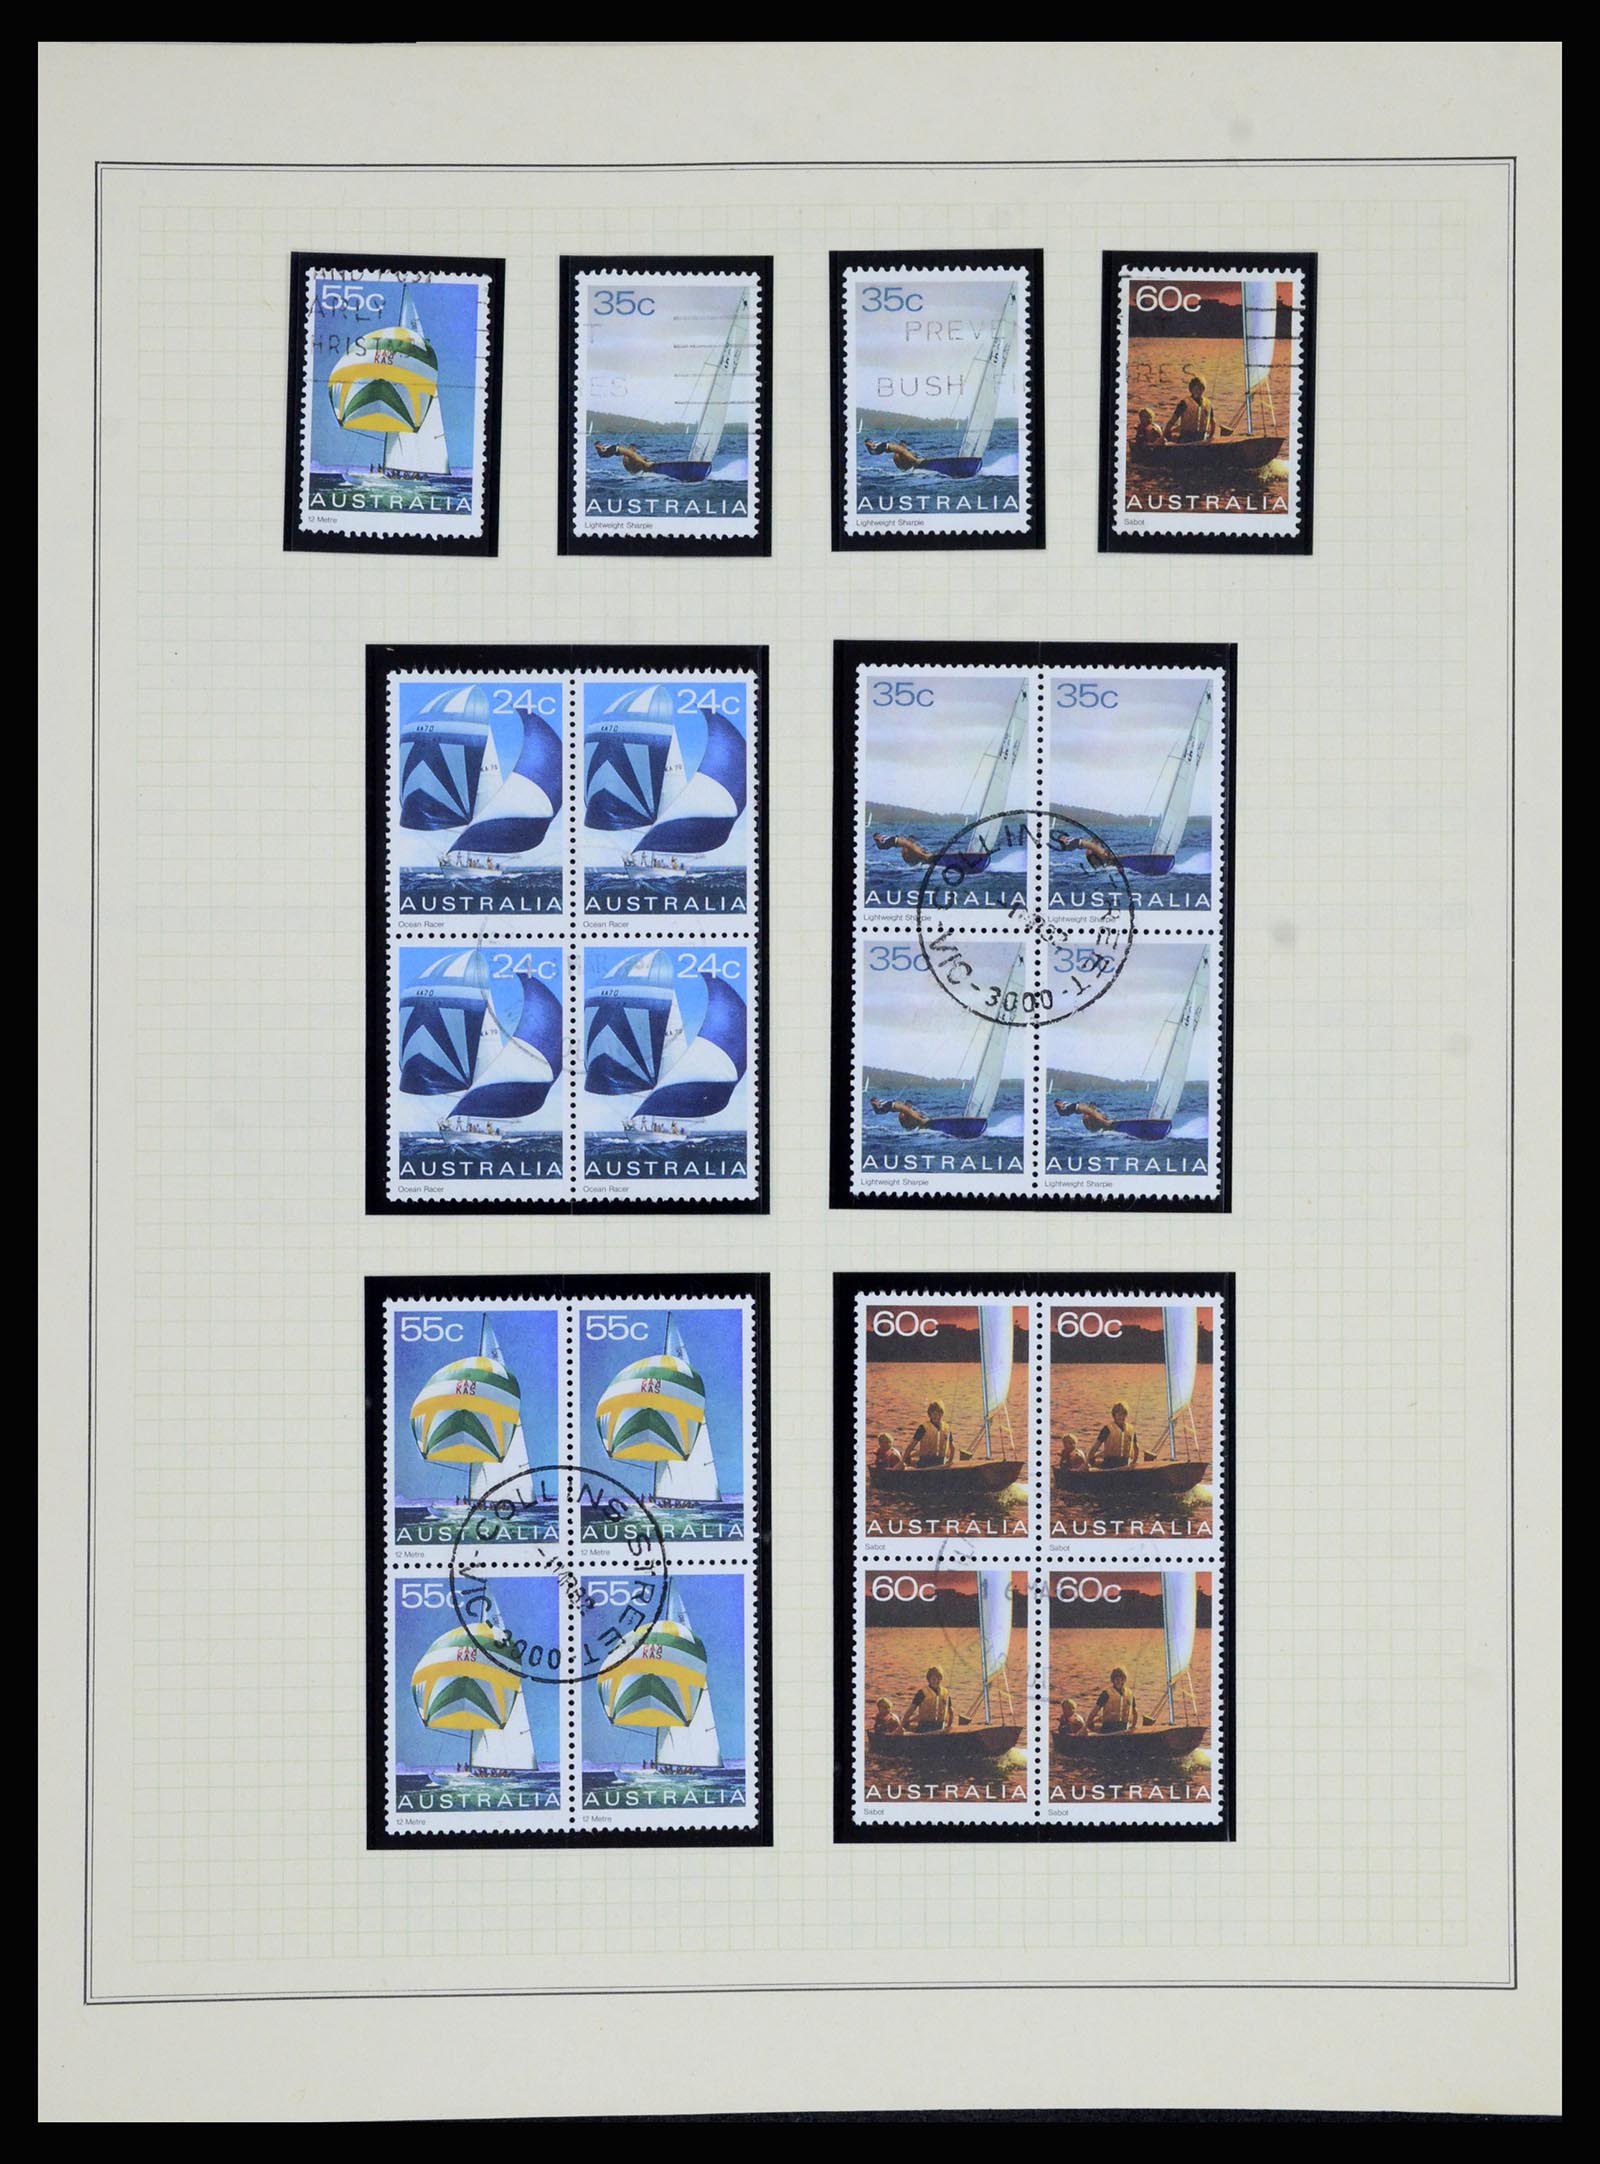 37049 077 - Stamp collection 37049 Australia 1913-1990.